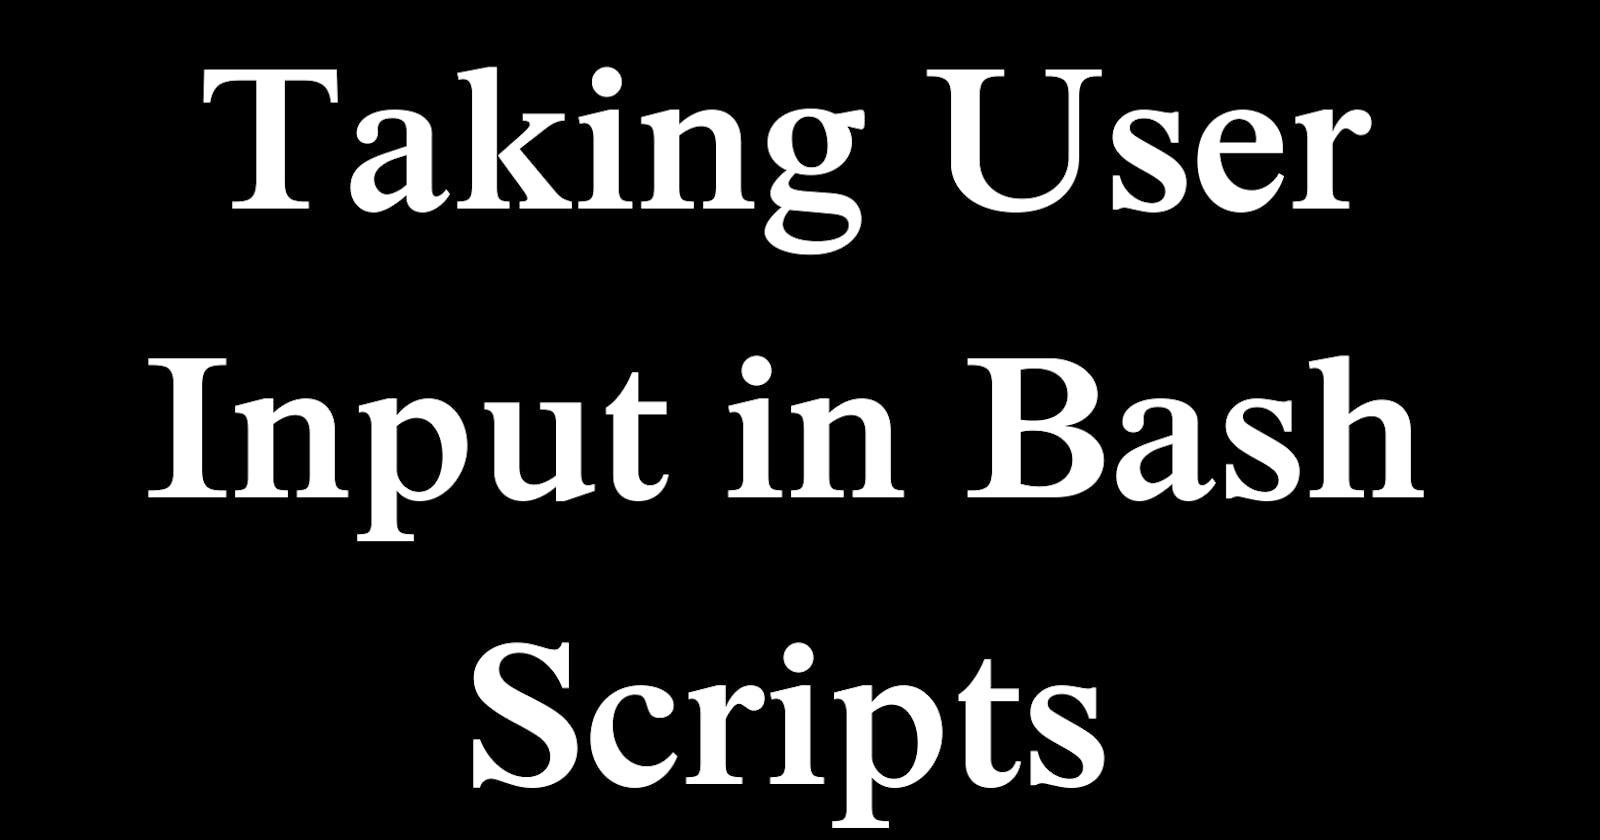 Taking User Input in Bash Scripts